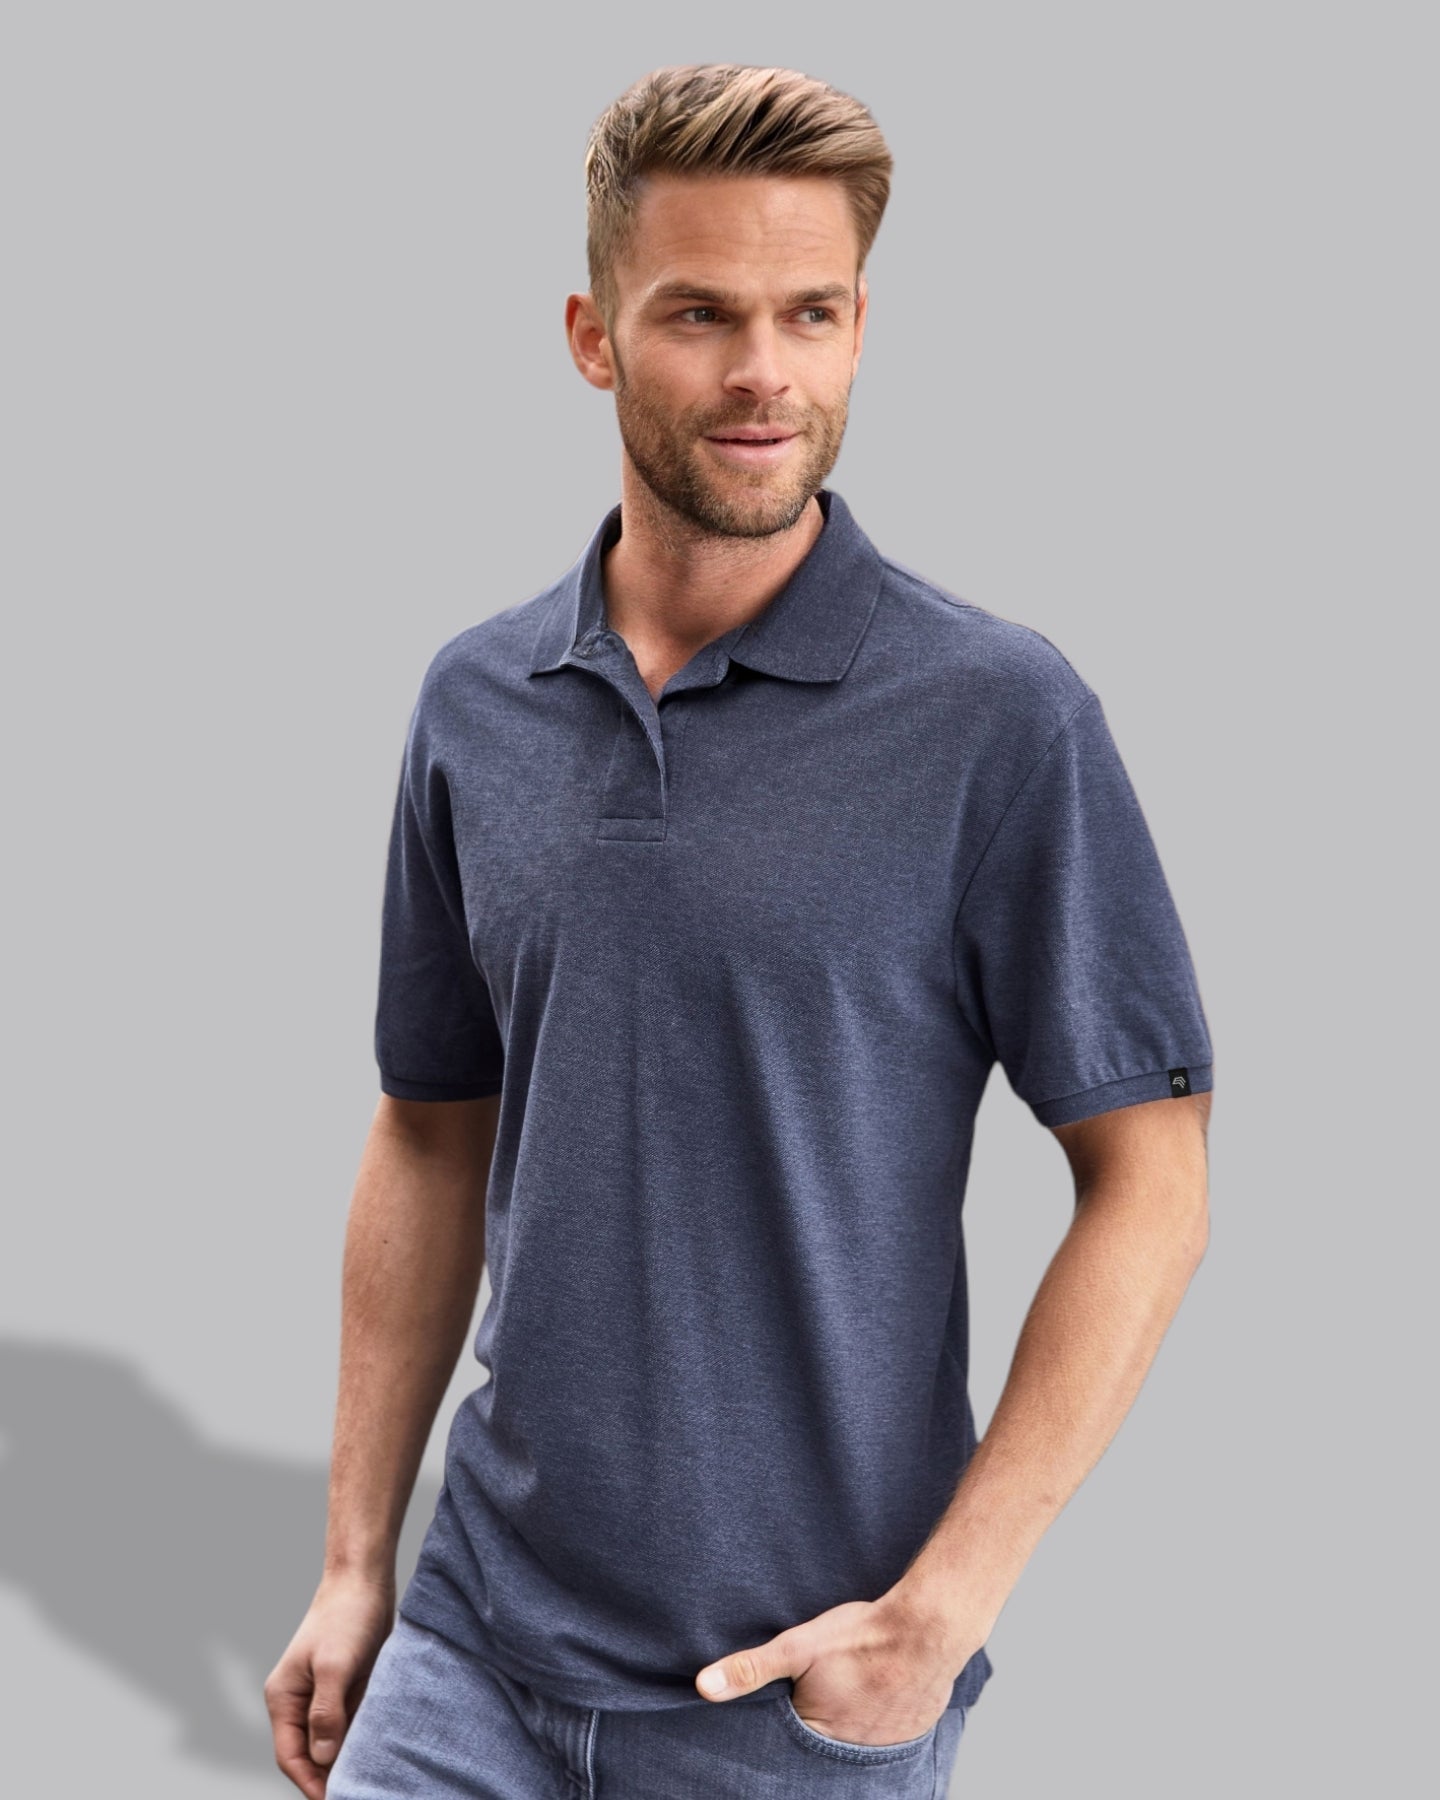 JAN 8010 ― Herren Bio-Baumwolle Polo Shirt - Stone Beige